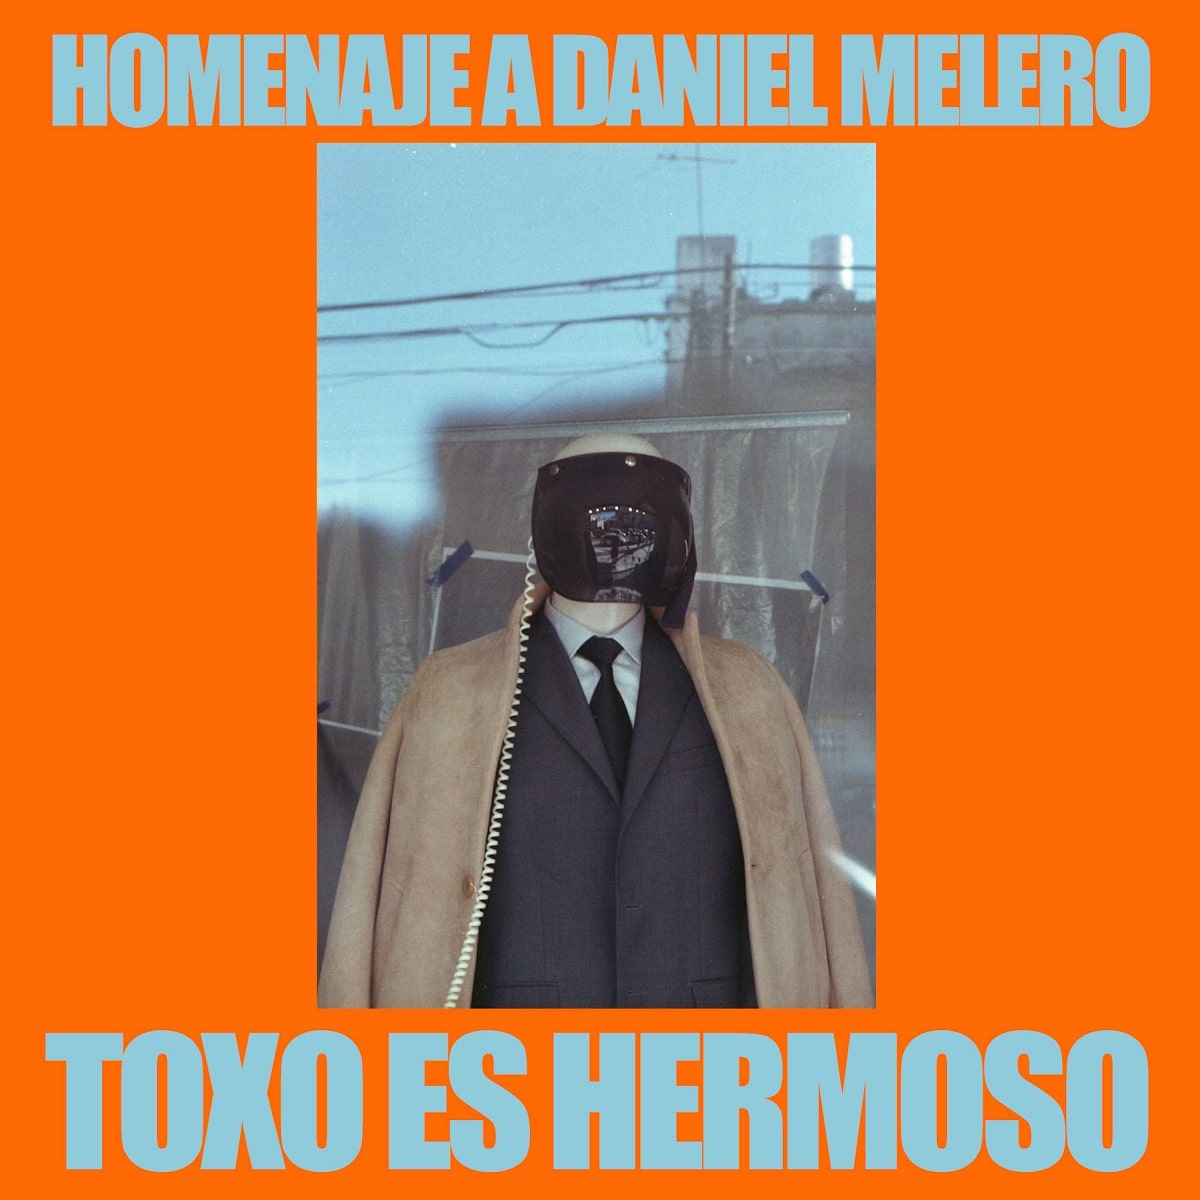 Toxo es hermoso, homenaje a Daniel Melero.